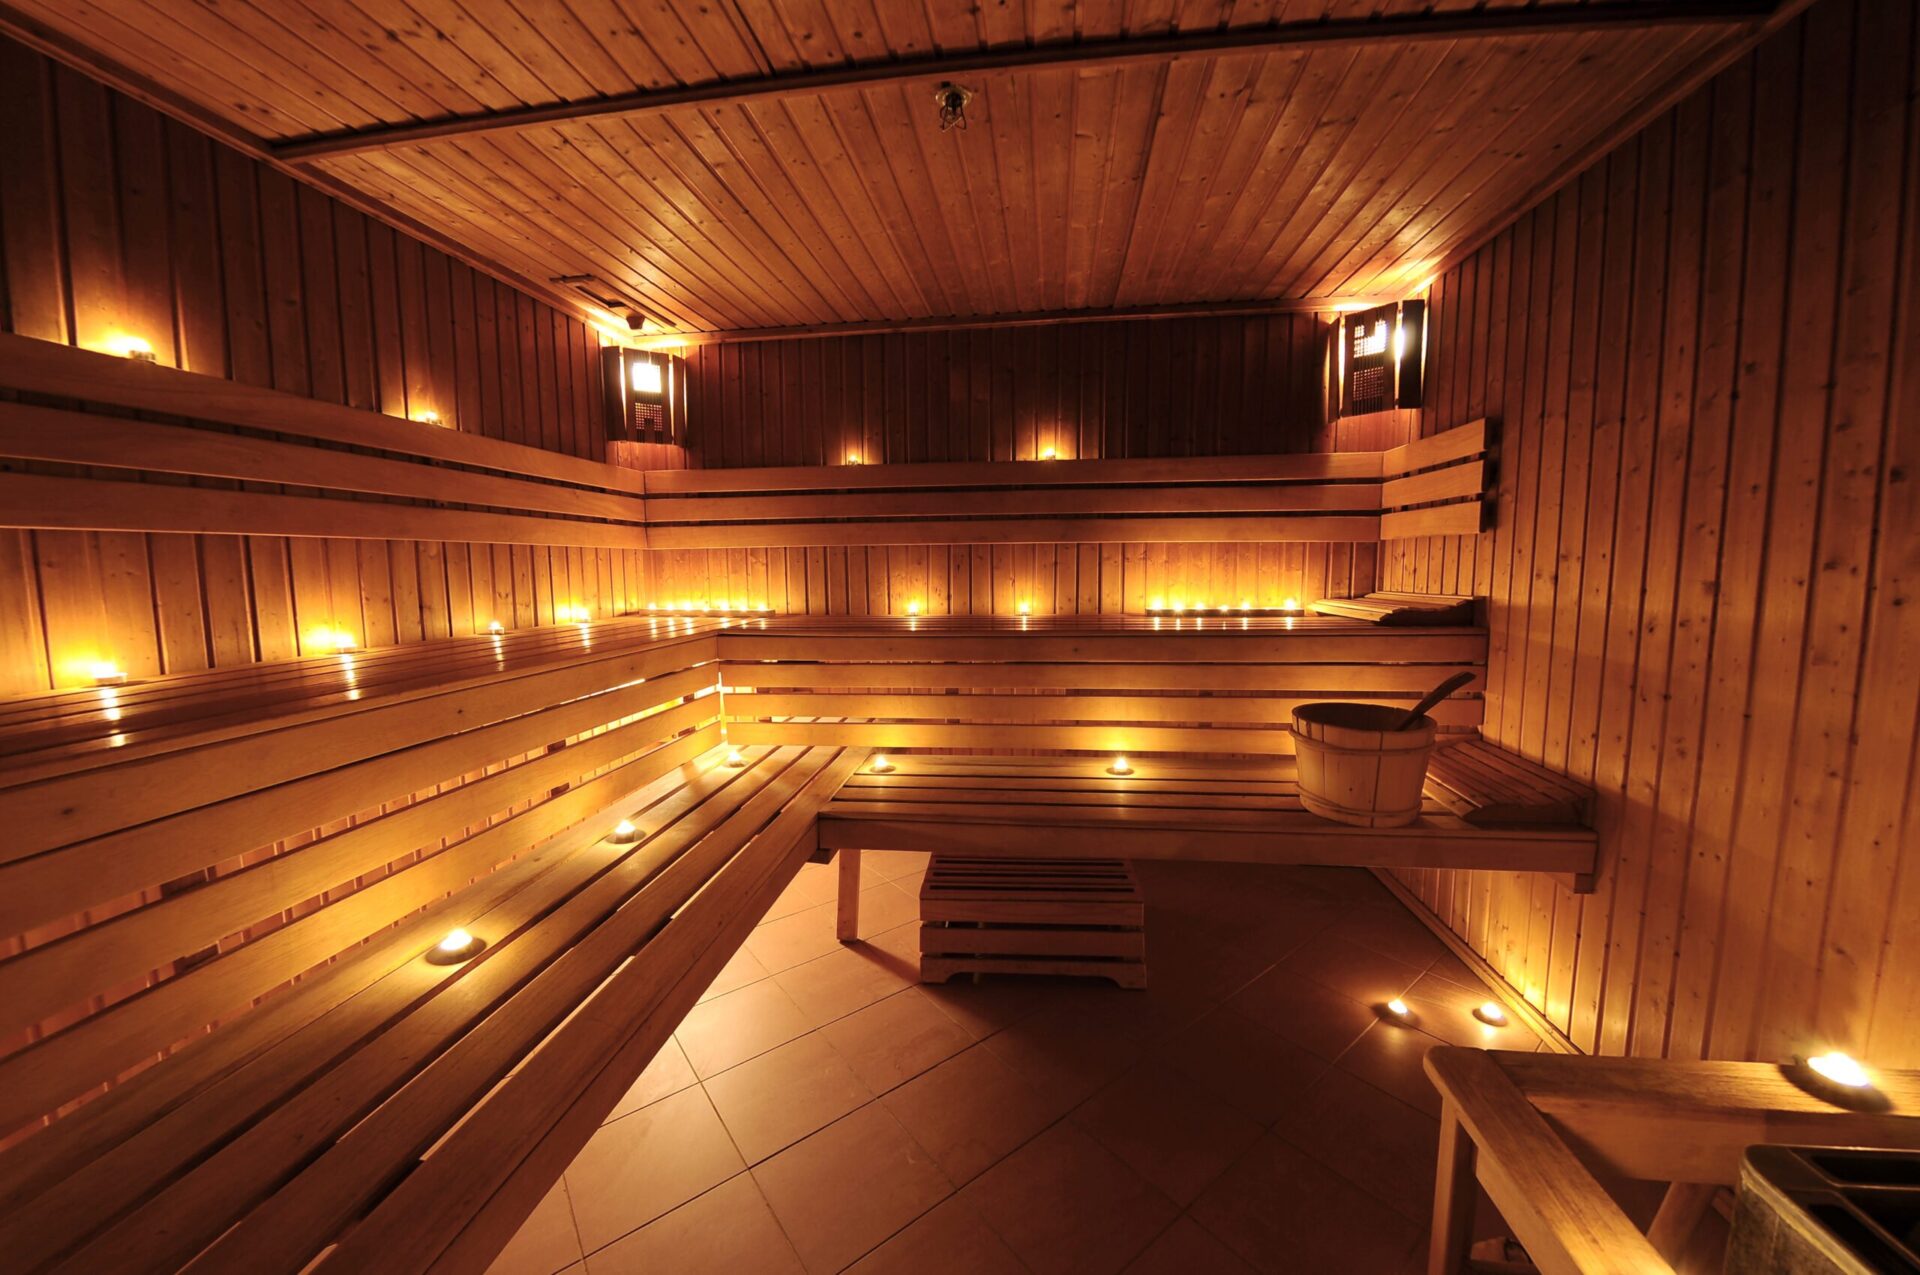 Warm finnish sauna interior with candles